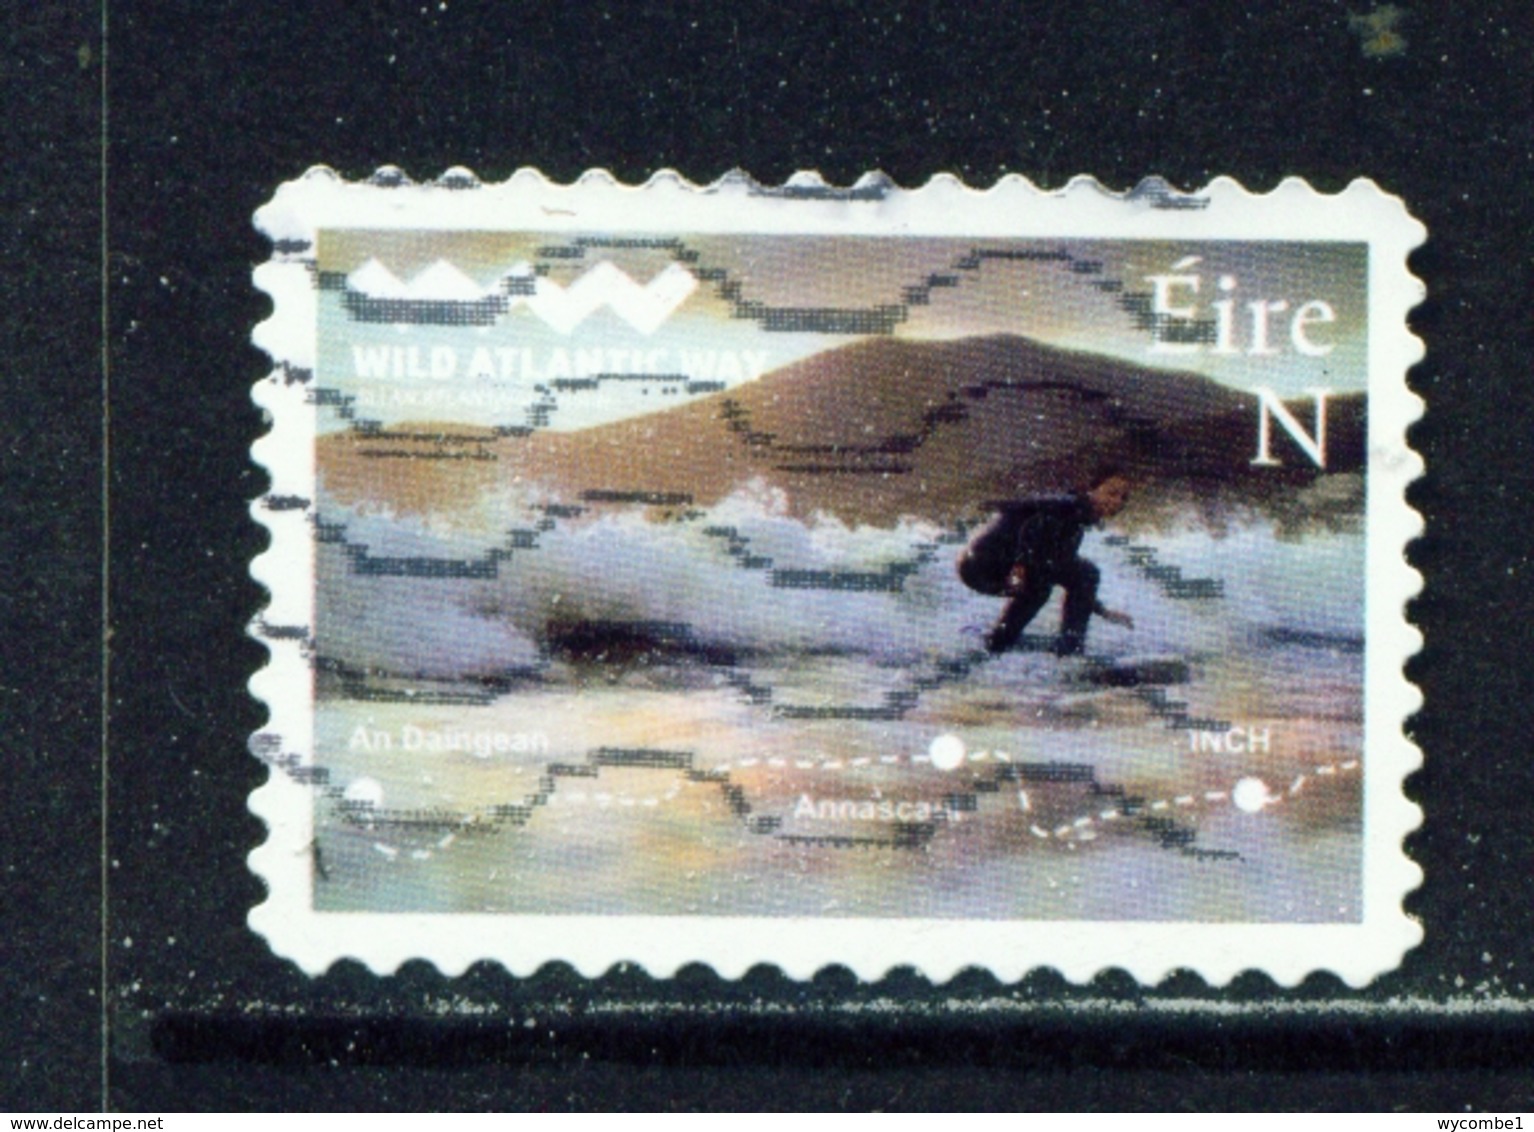 IRELAND  -  2019  Wild Atlantic Way  'N'  Self Adhesive Used As Scan - Used Stamps